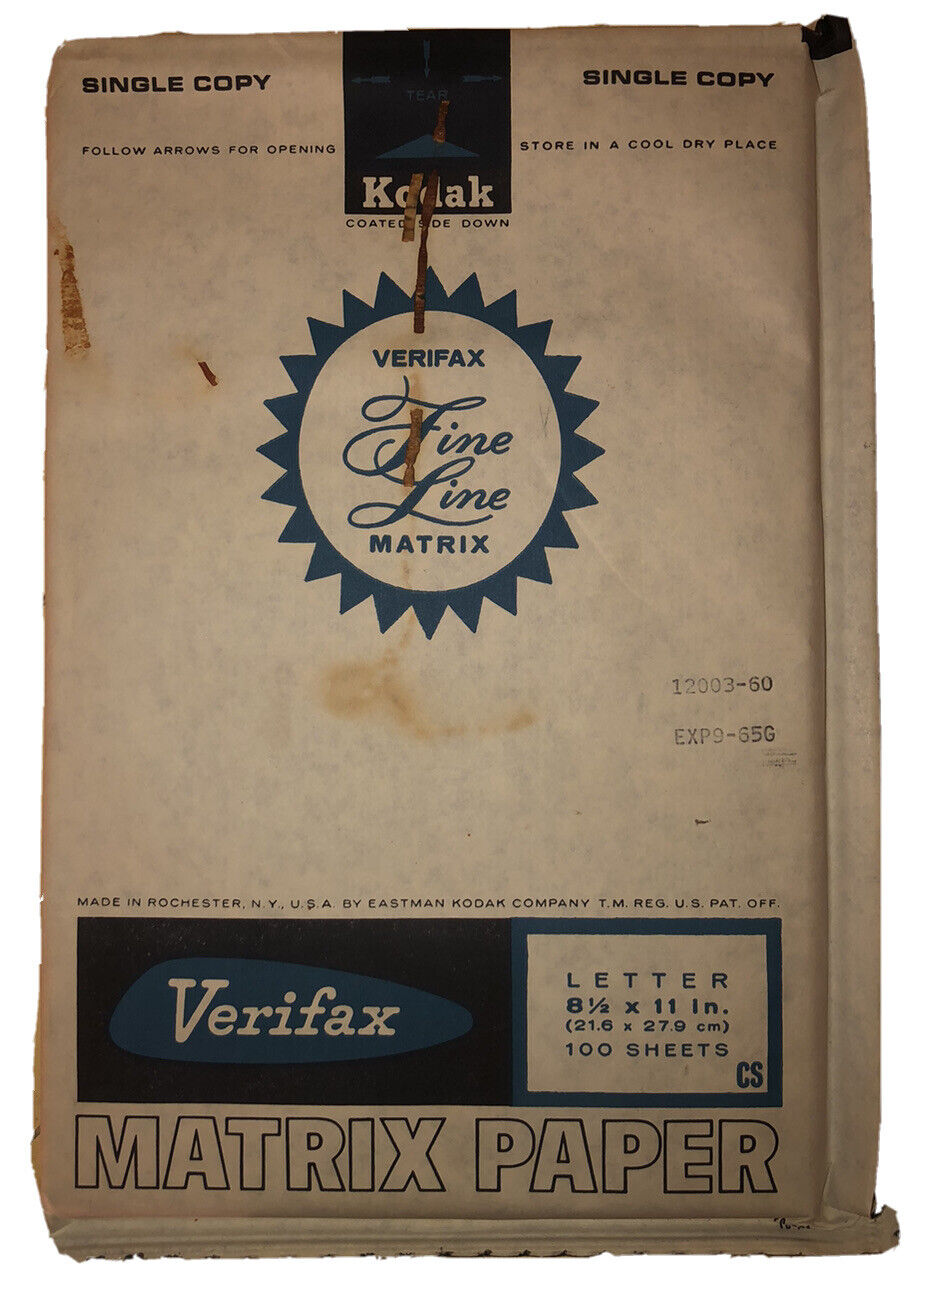 1965 *Sealed* Kodak Verifax Matrix Paper Fine Line Single Copy 100-Pack Sheets